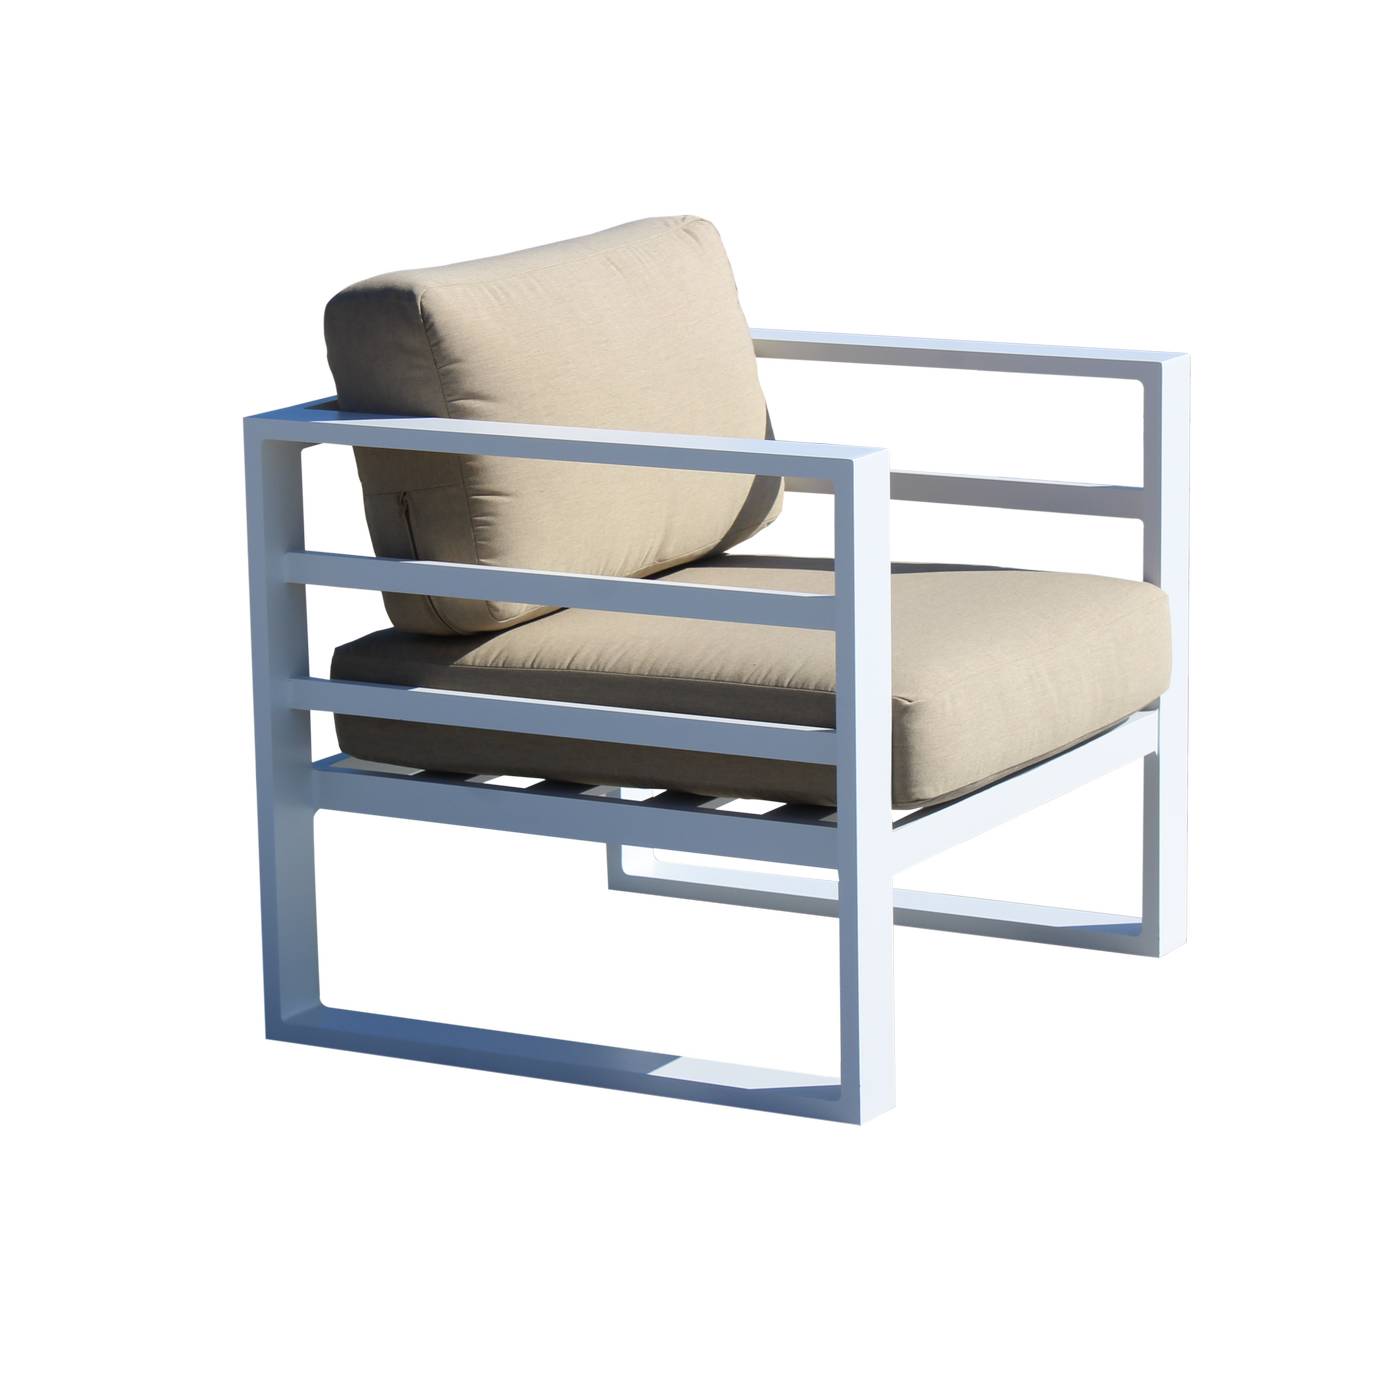 Set Aluminio Dalas-7 - Conjunto de aluminio para jardín o terraza: sofá 2 plazas + 2 sillones + mesa de centro. Disponible en color blanco, antracita, champagne, plata o marrón.